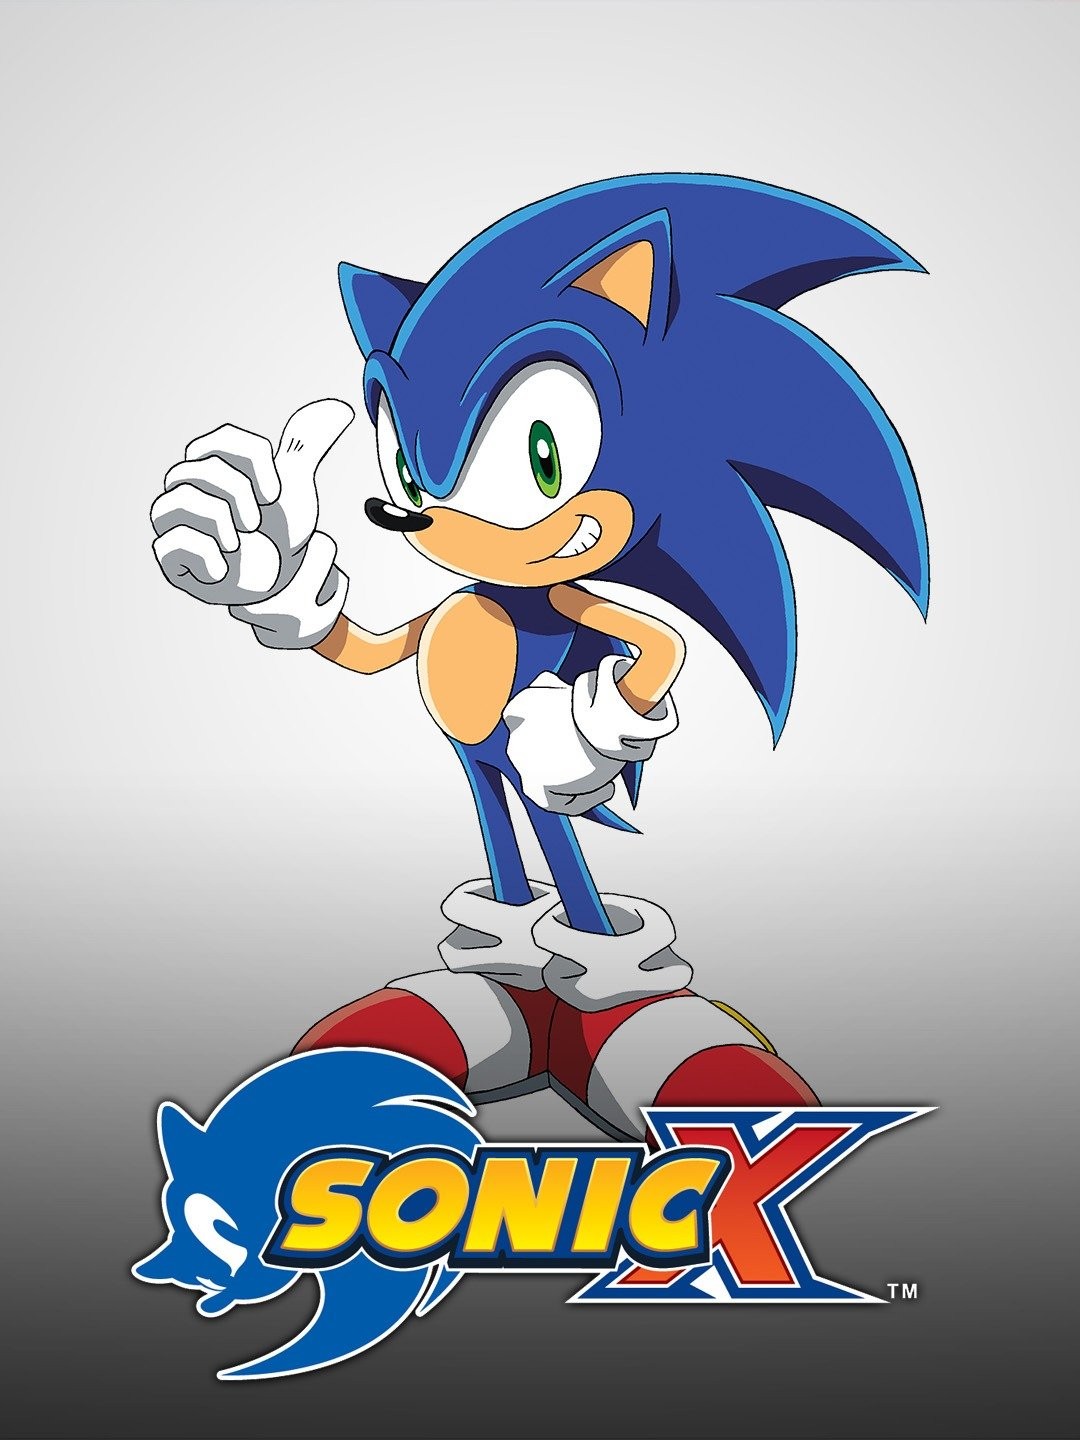 Sonic X: Season 1, Episode 2 - Rotten Tomatoes